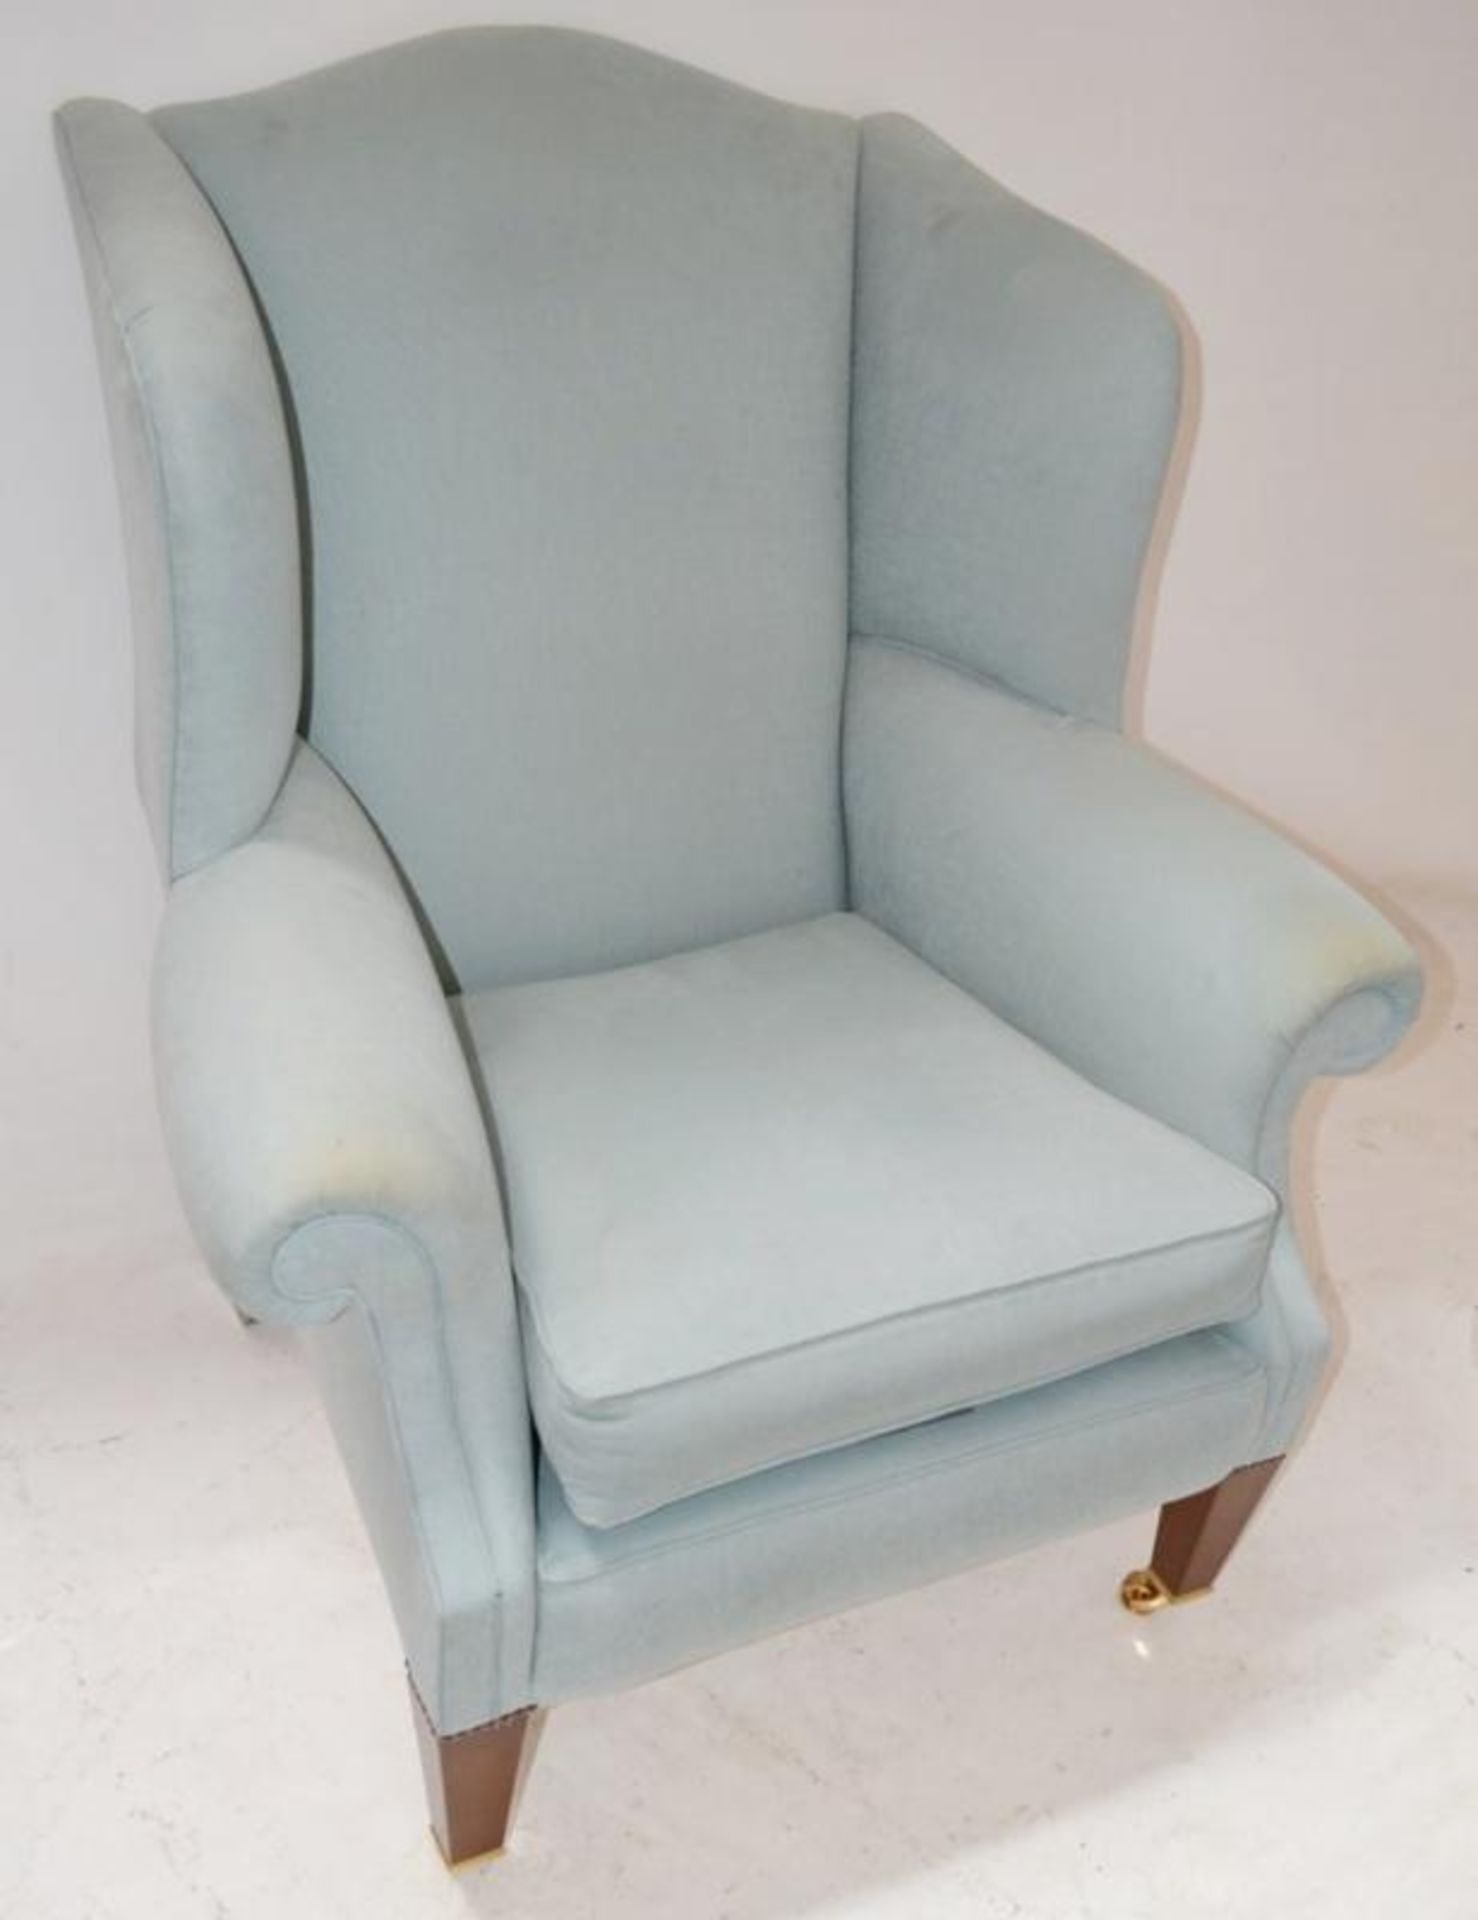 1 x Duresta "Somerset" Wing Chair Light Blue - Please Read Description - Dimensions: 113H x 91W x 92 - Image 8 of 10